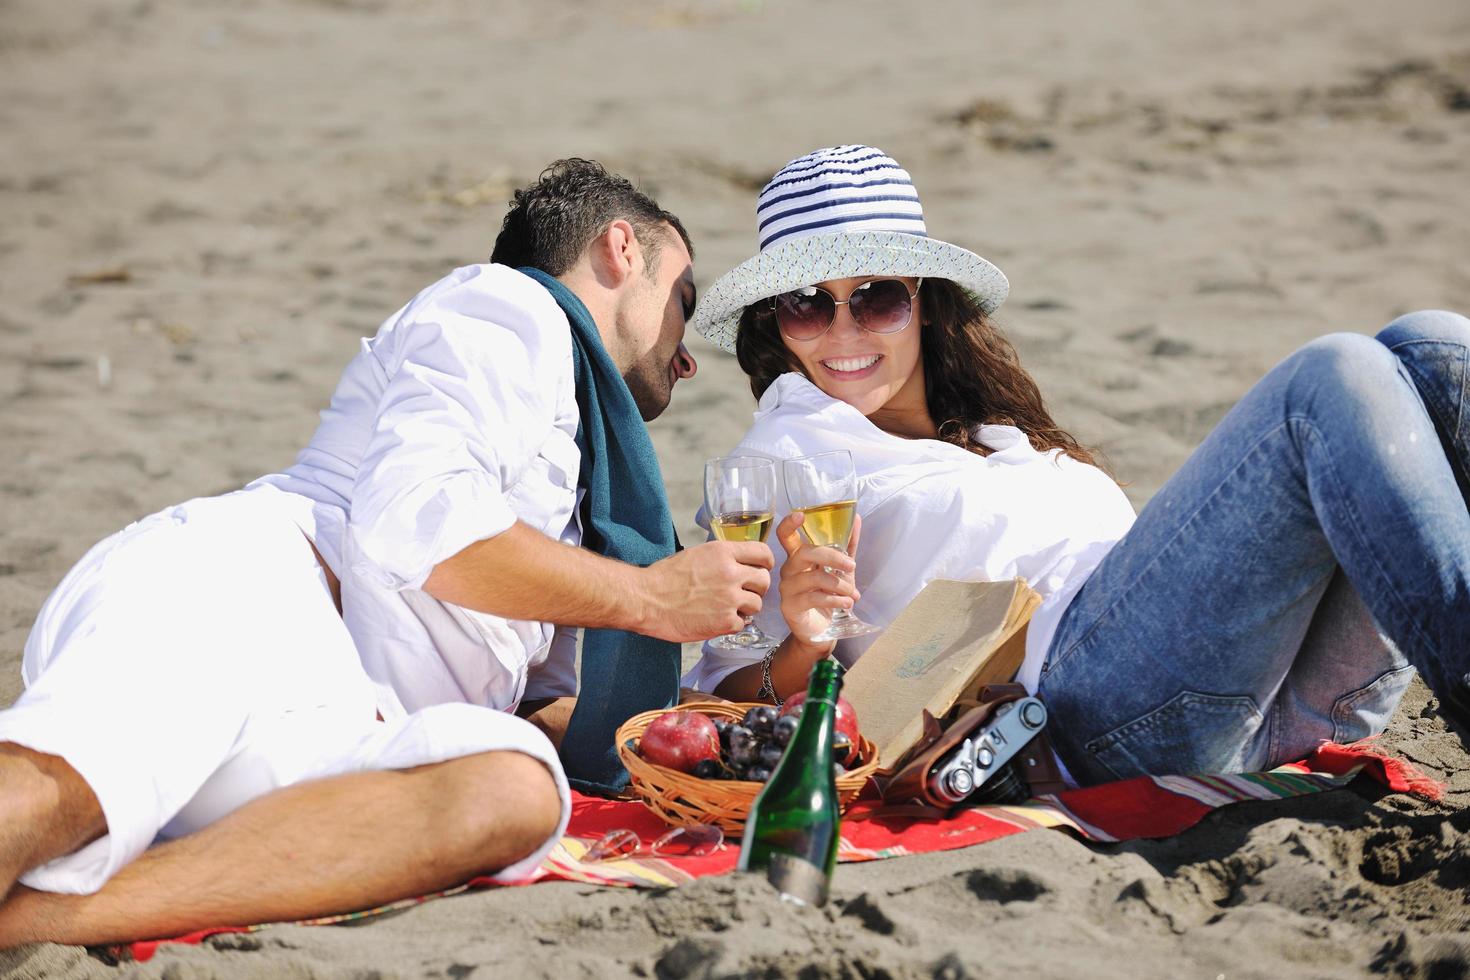 young couple enjoying  picnic on the beach photo